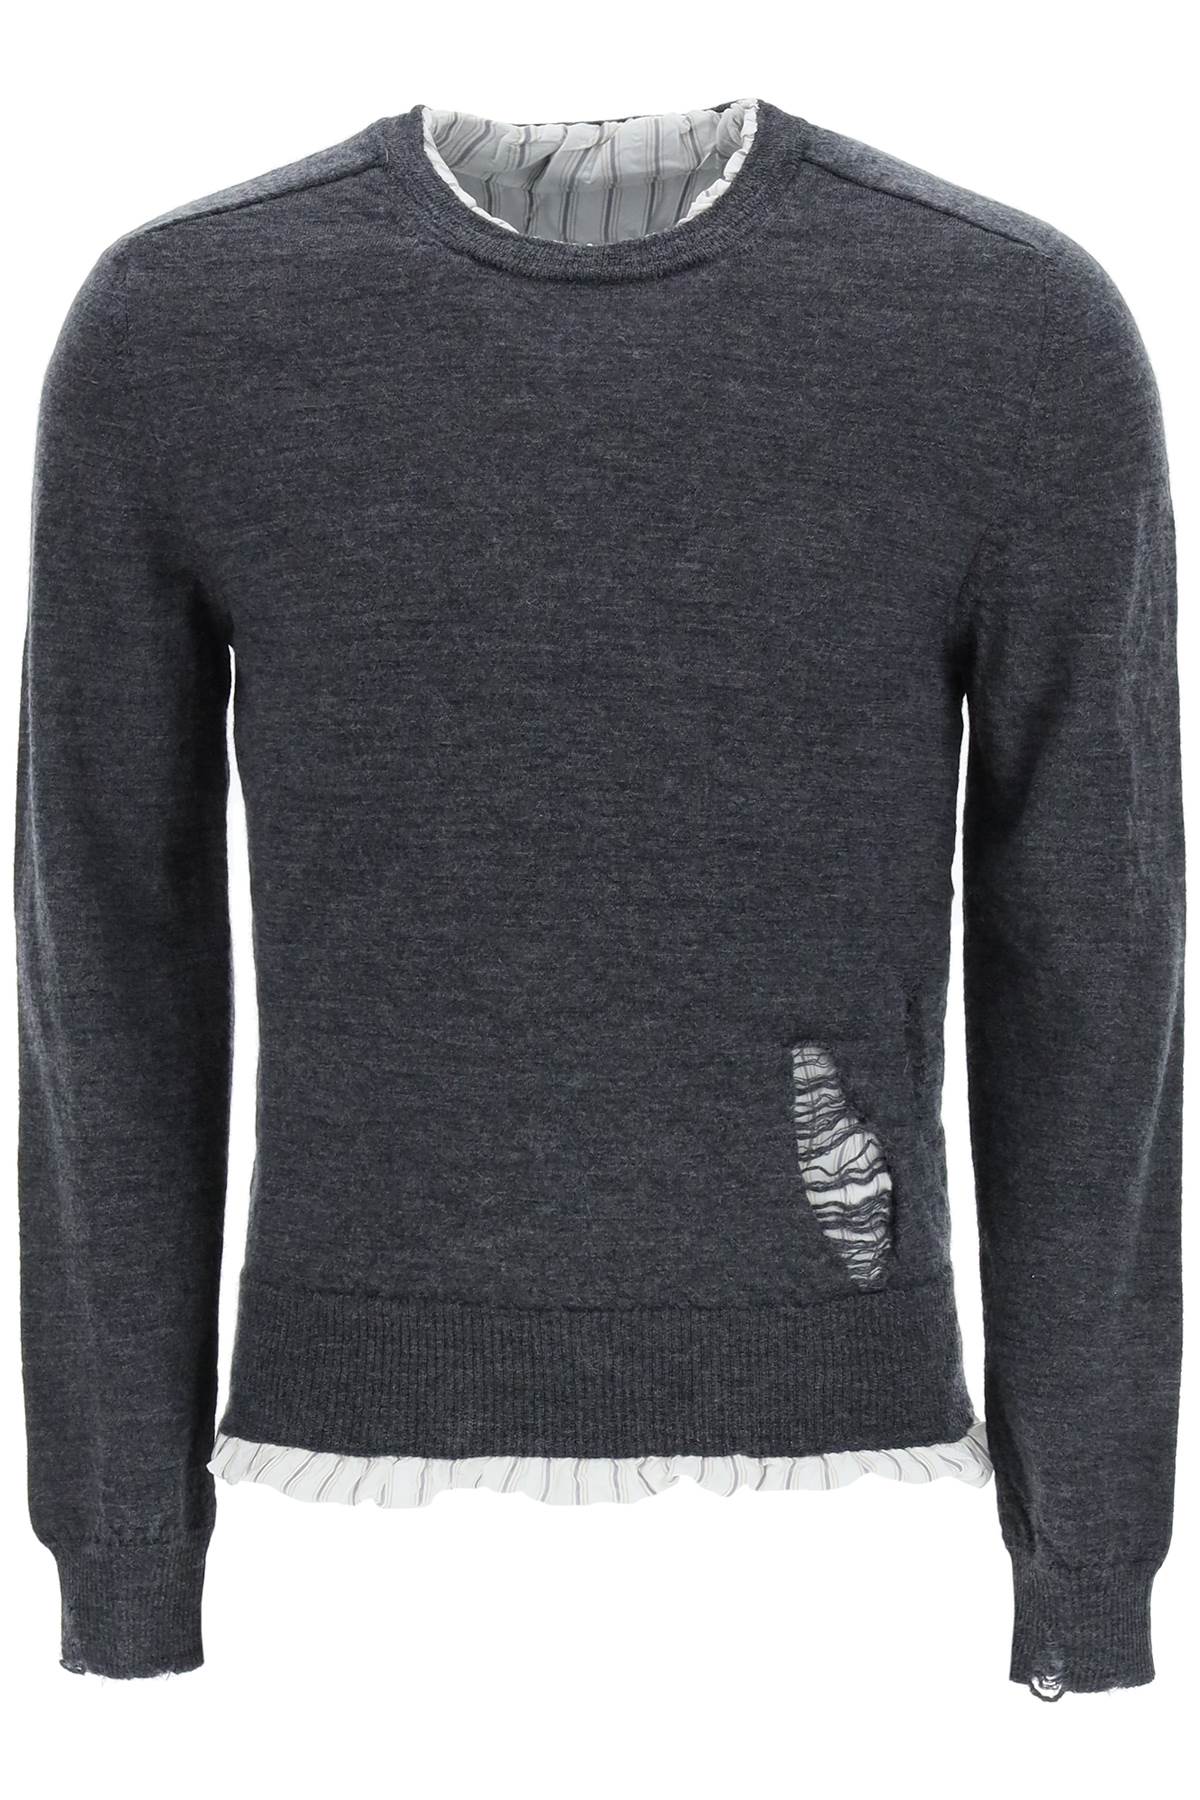 Maison Margiela anonymity Of The Lining Wool Sweater